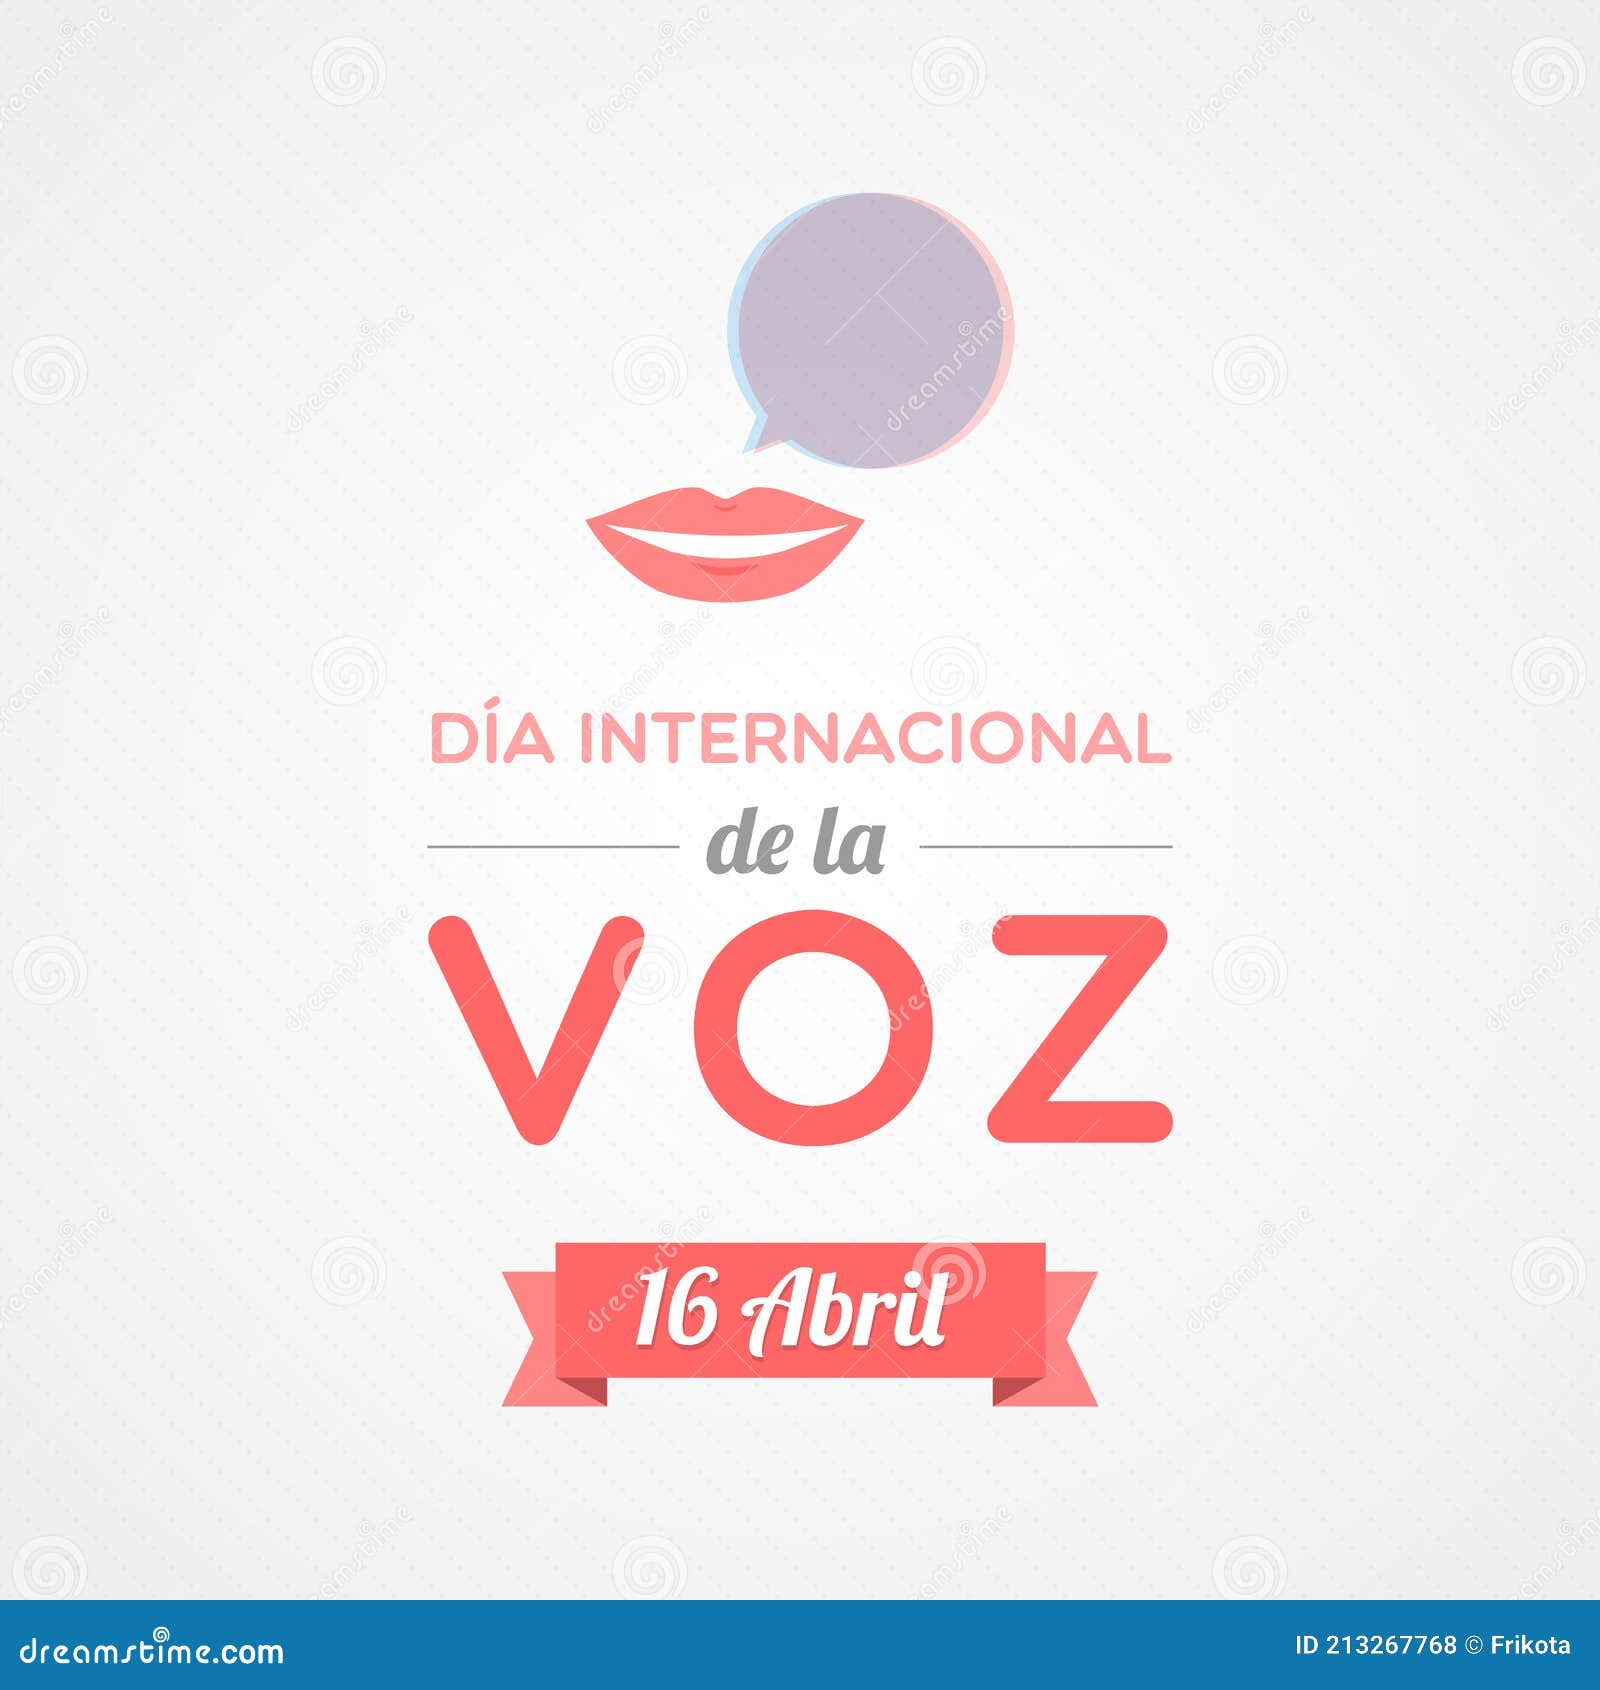 world voice day in spanish. april 16. dia internacional de la voz.  , flat 